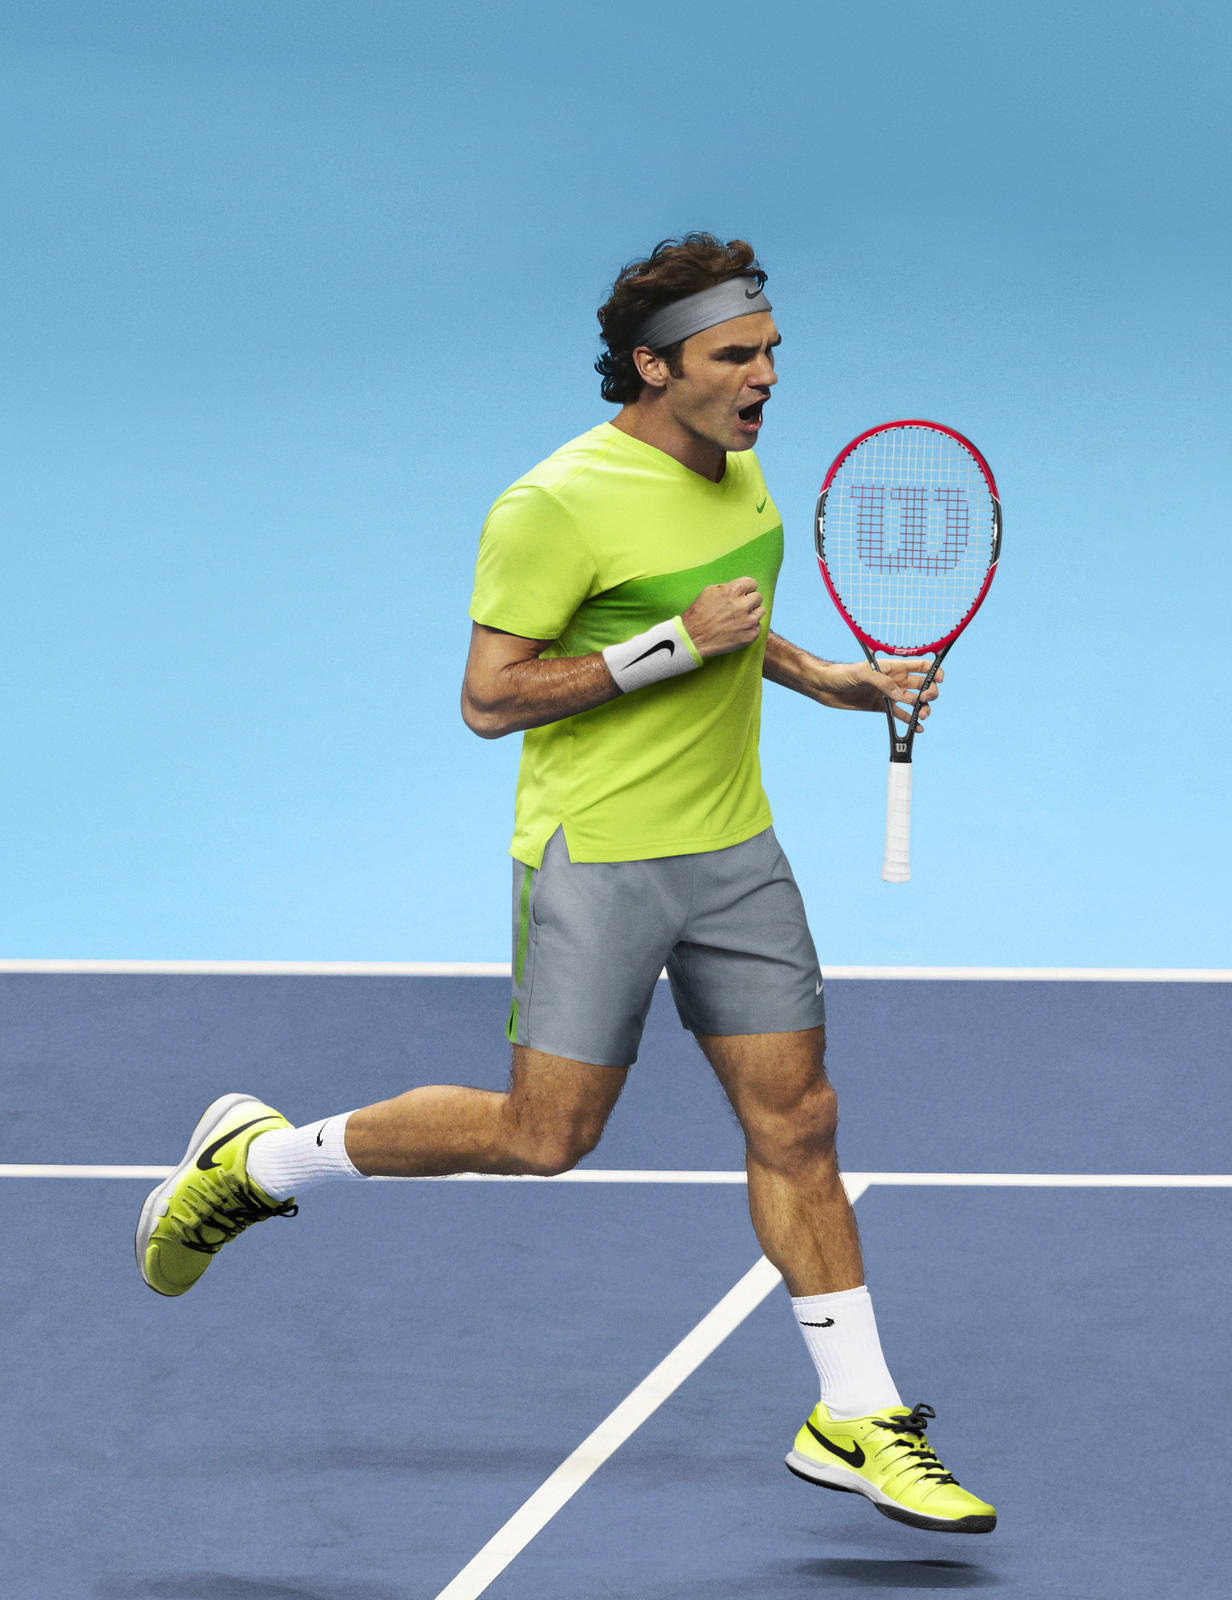 Roger Federer Nike tennis outfit australian open 2015 yellow